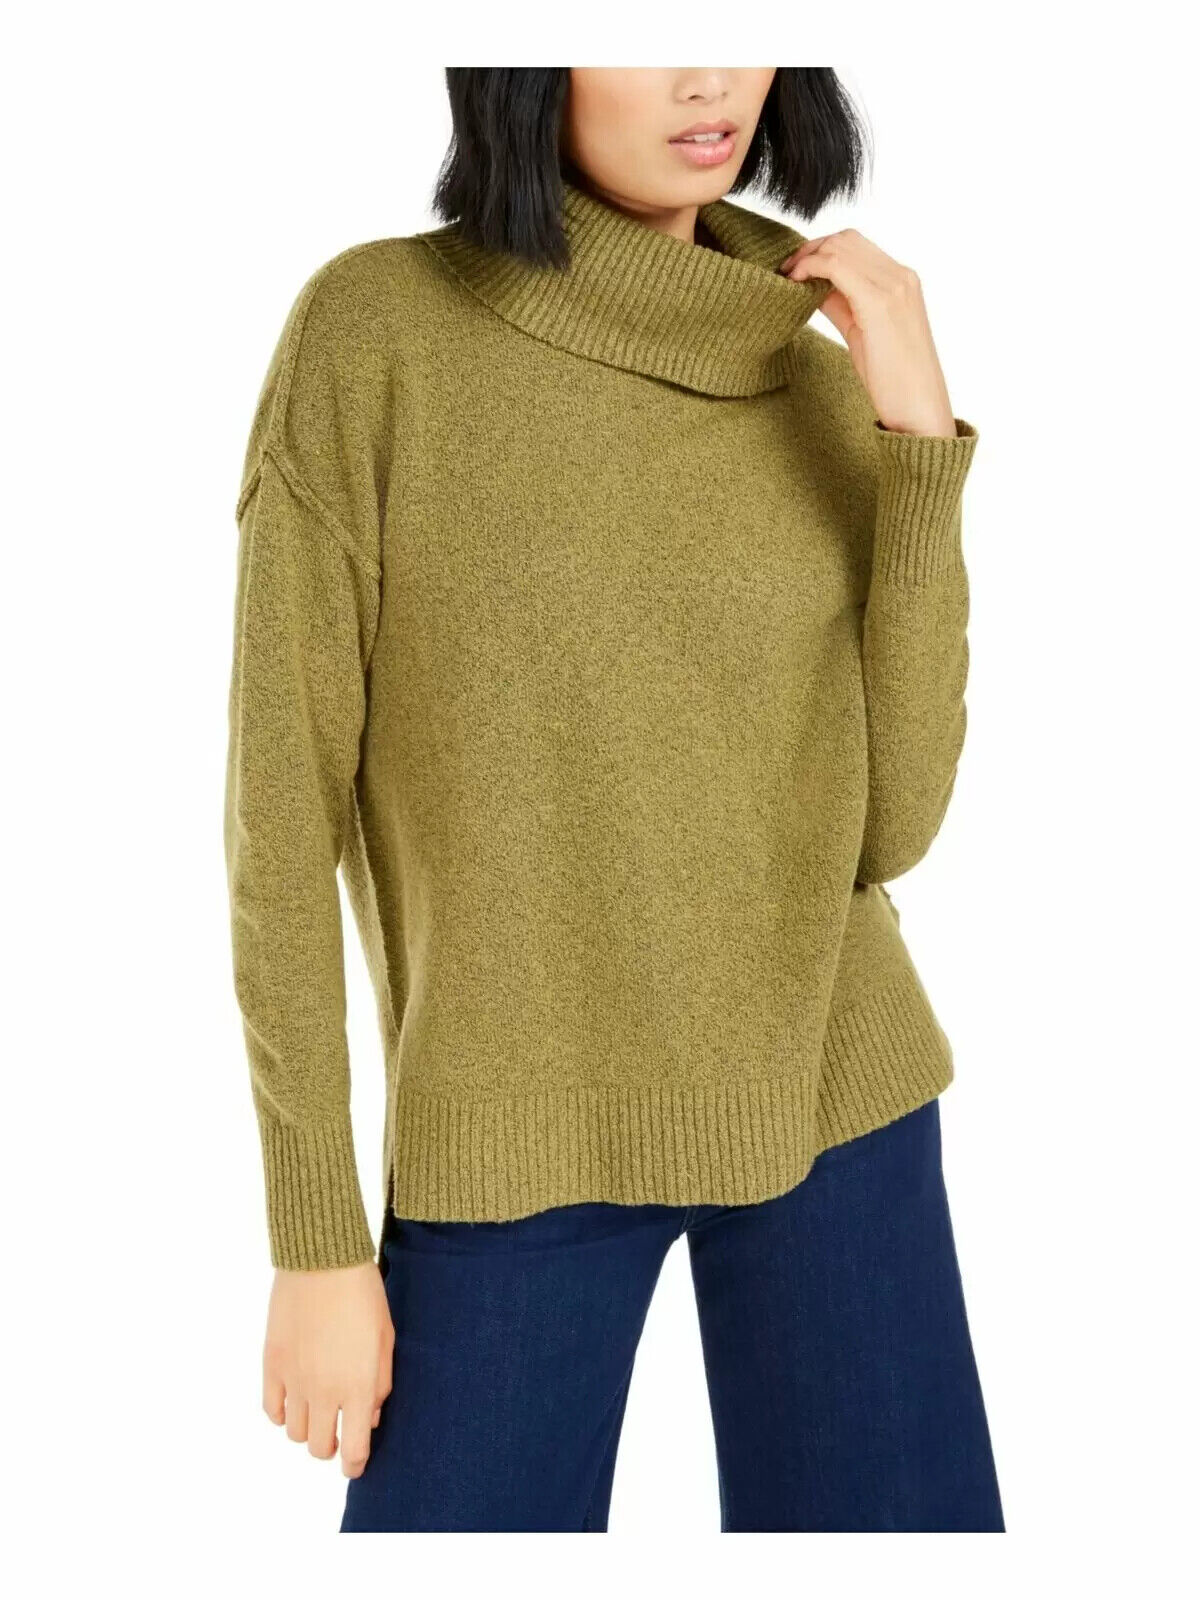 Bar III Becca Tilley x Turtleneck High-Low Sweater $69.50 Size XS # 5A 1696 NEW